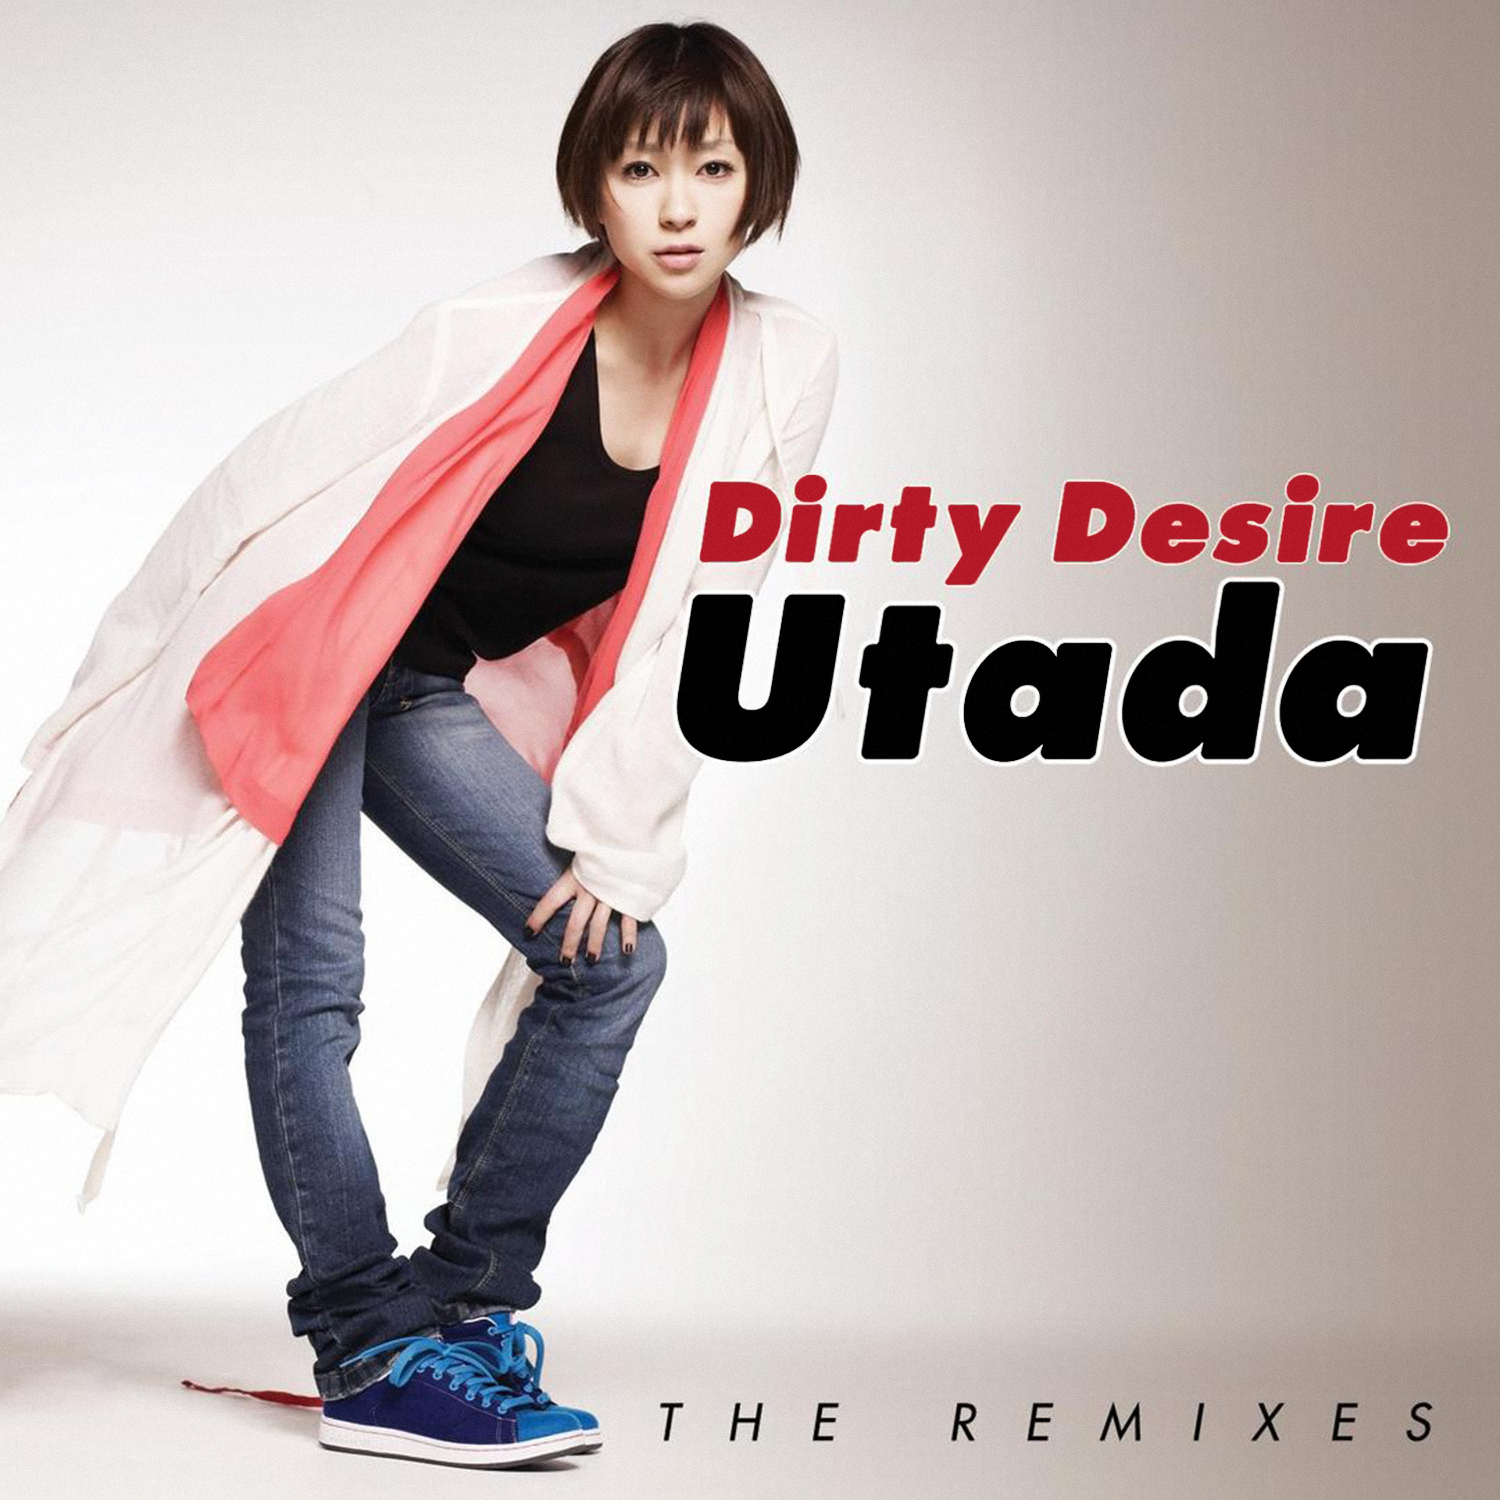 Utada - Dirty Desire (Font)